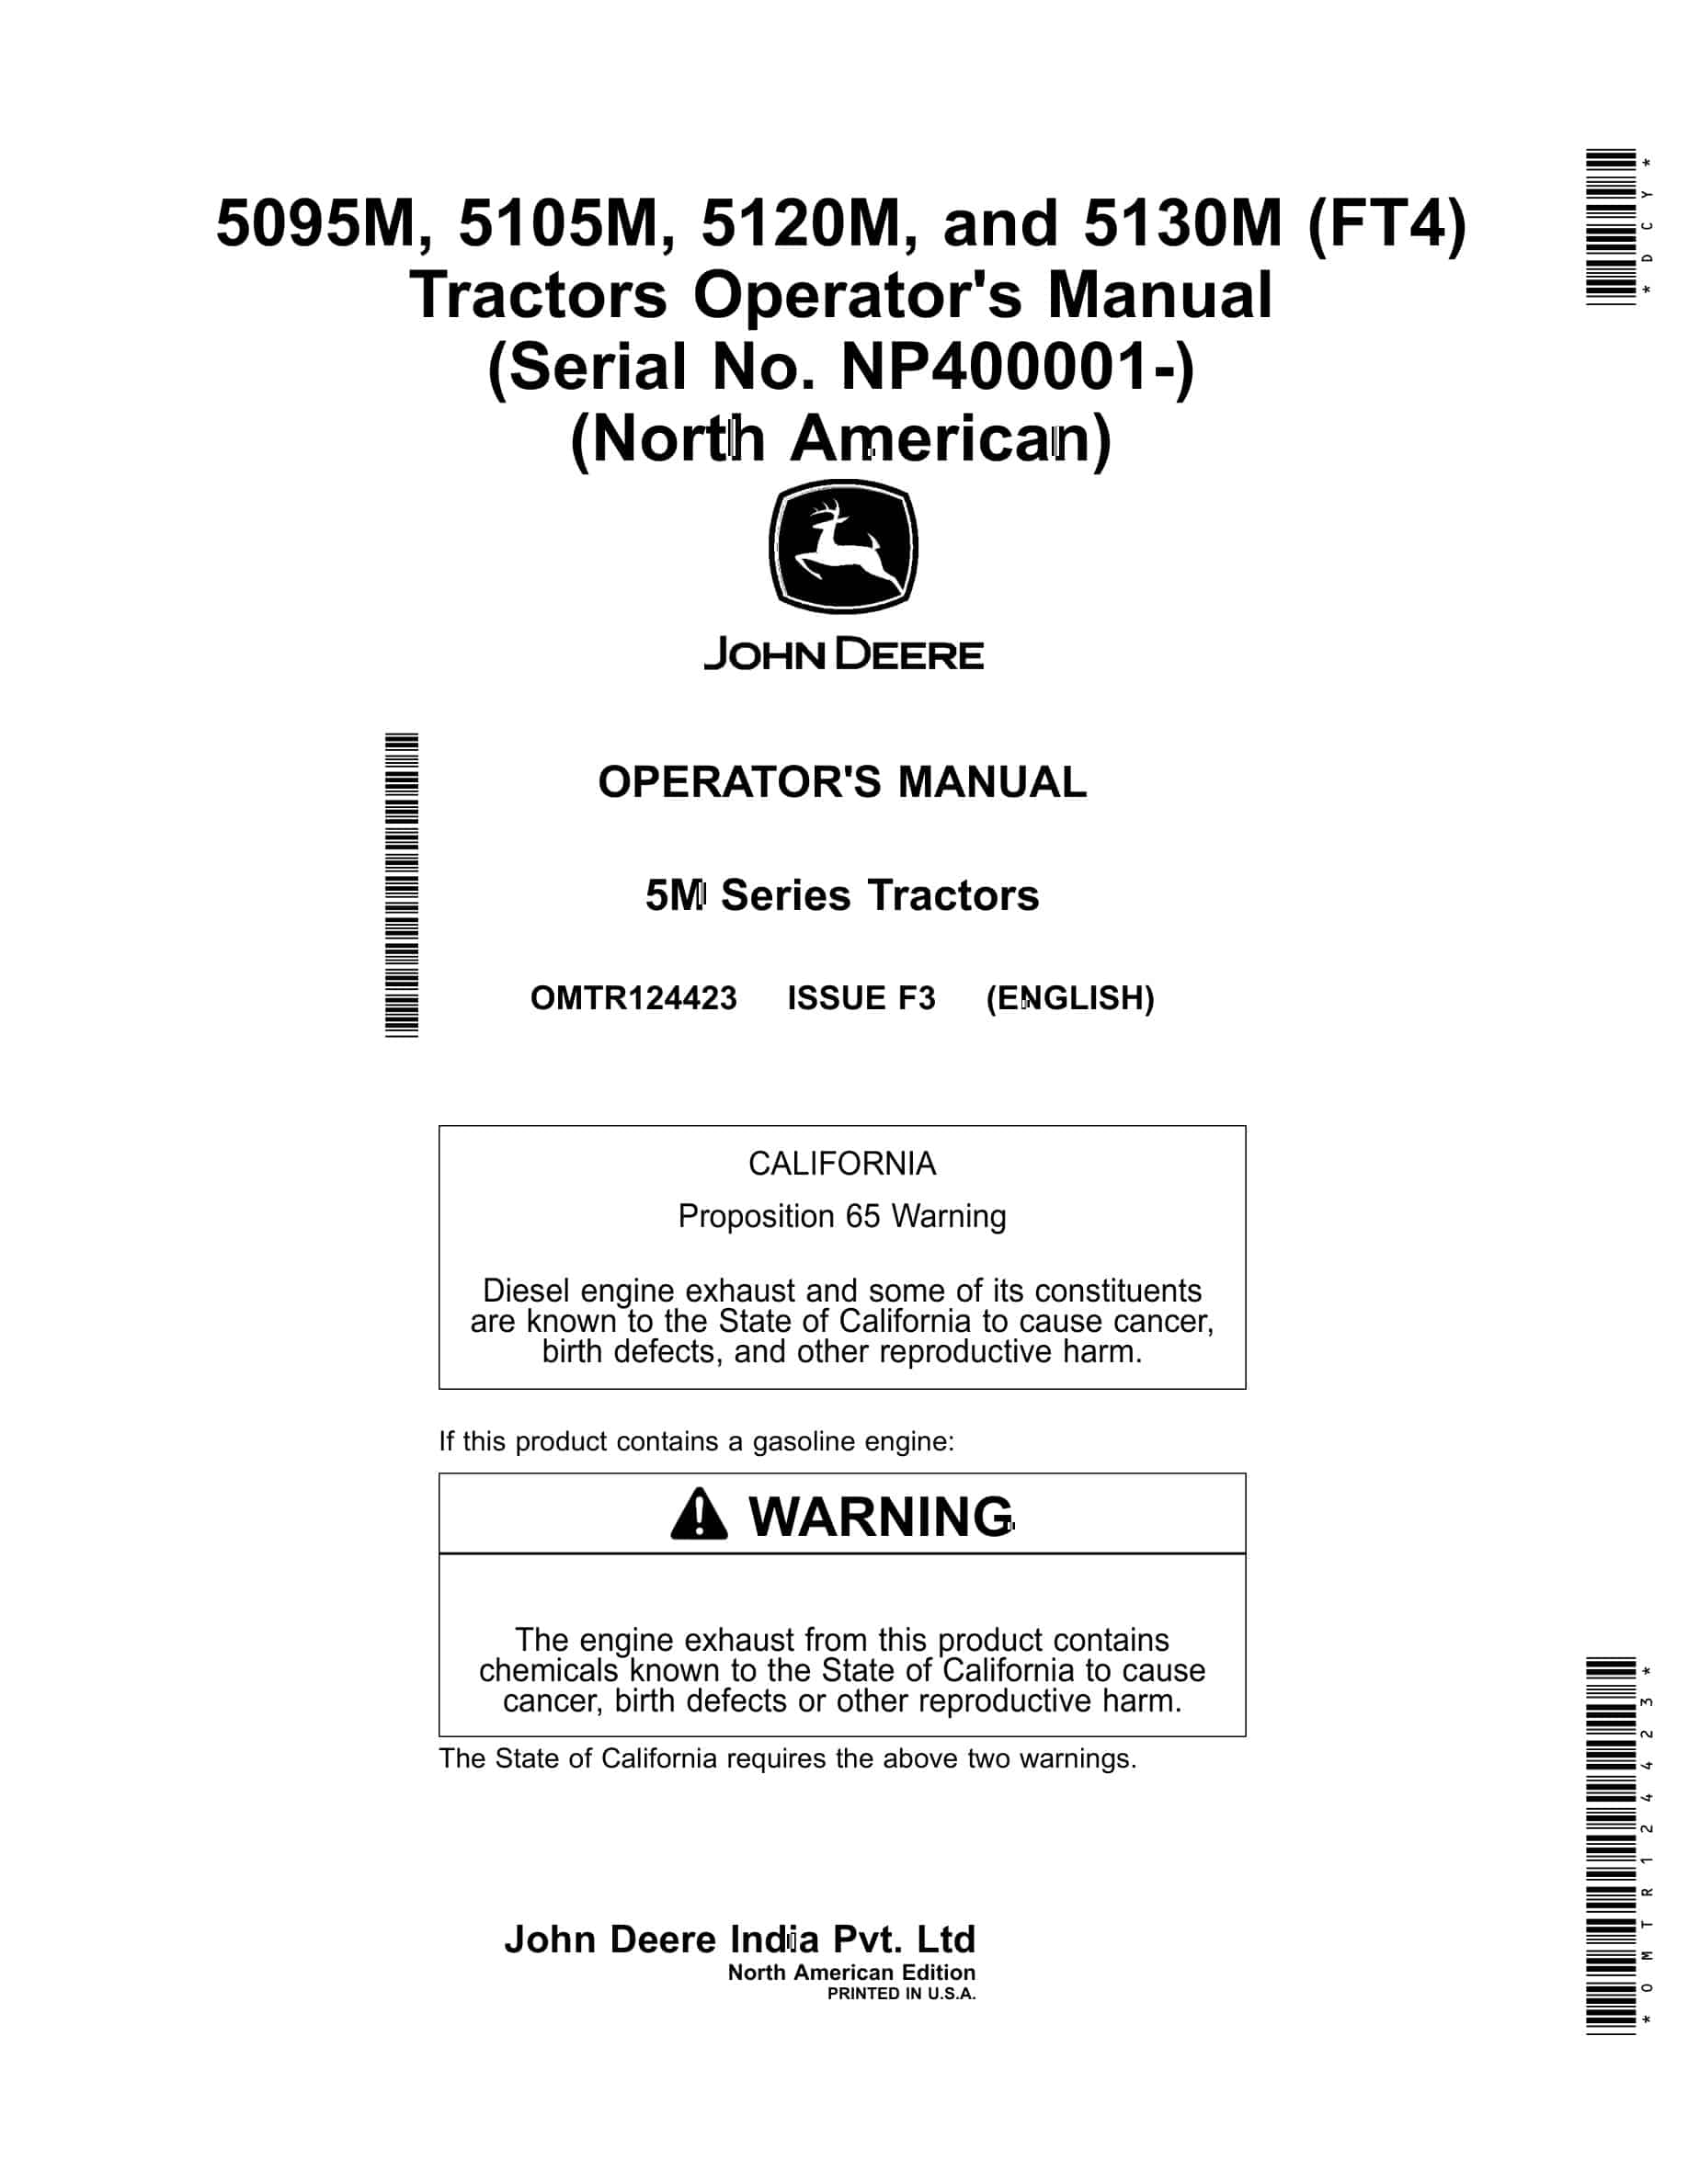 John Deere 5m Series Tractors Operator Manuals OMTR124423-1